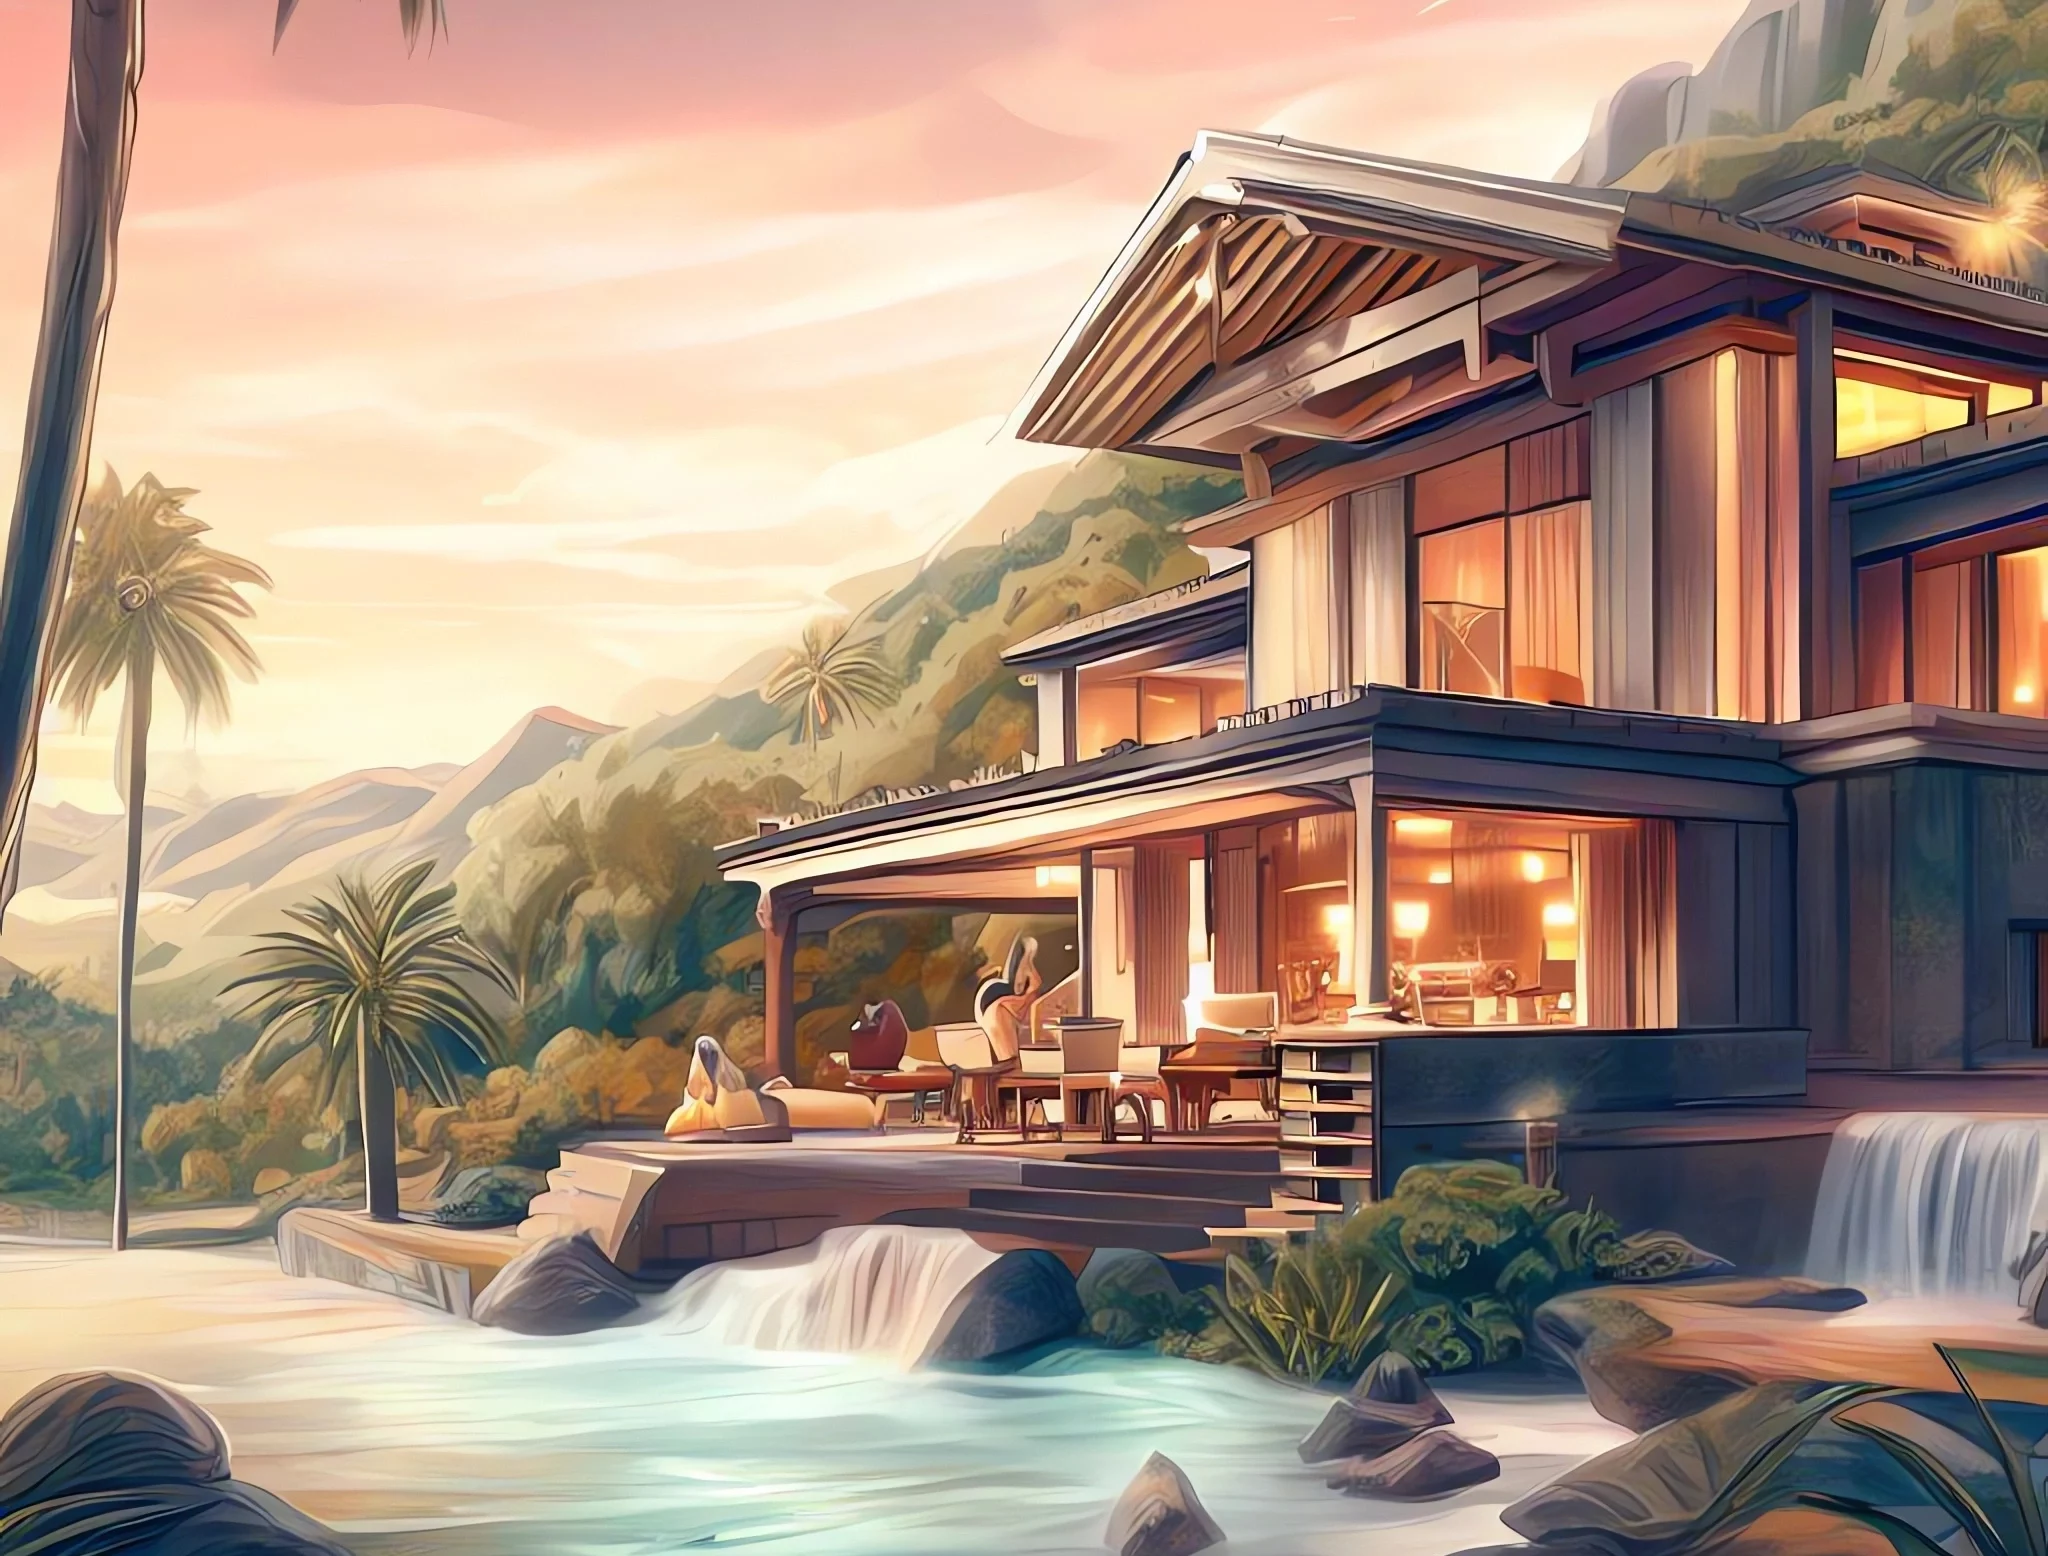 Illustration of a villa in a lush natural environment